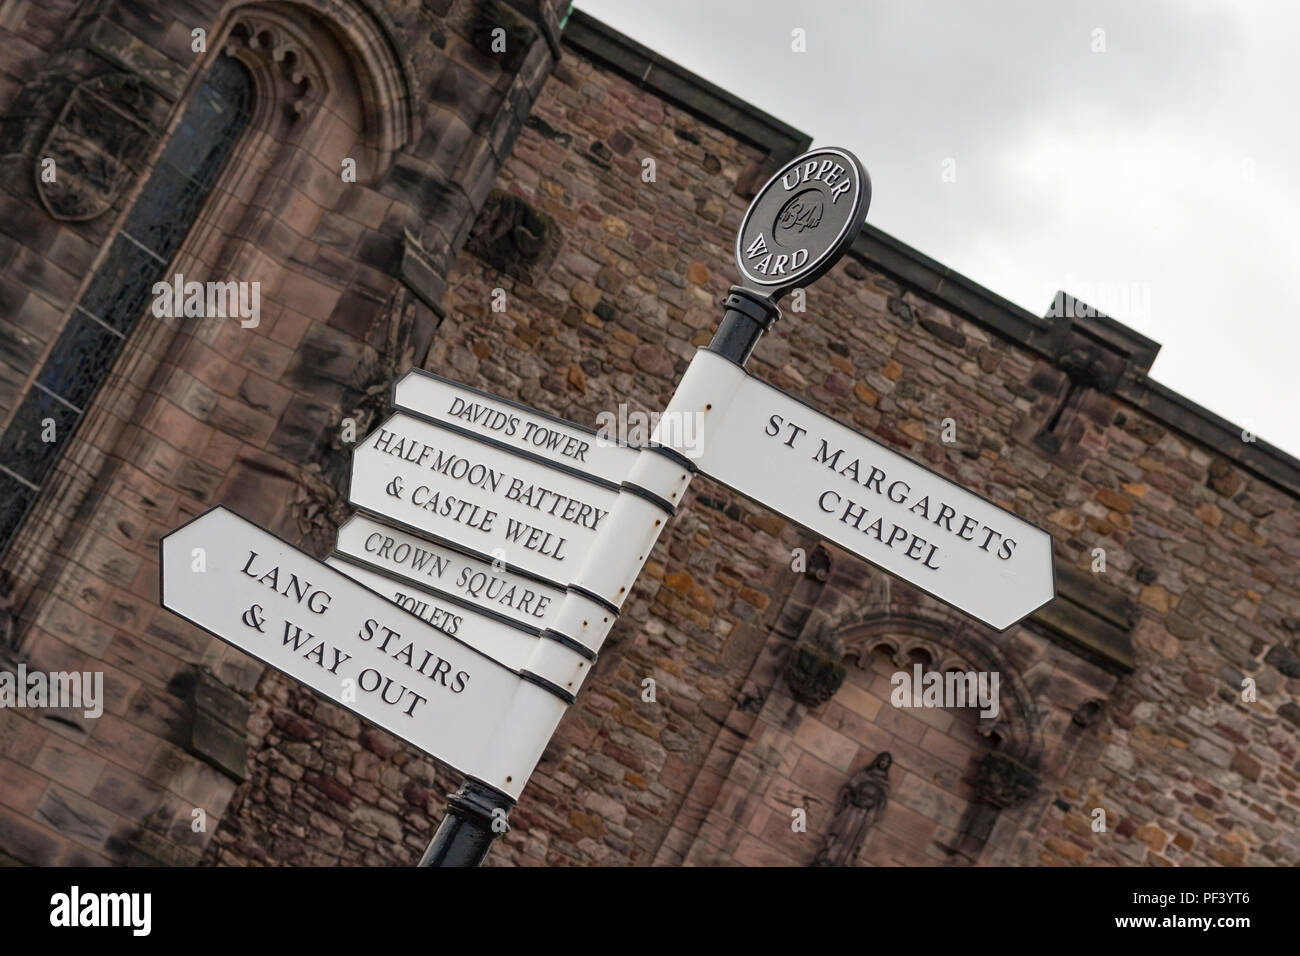 Wayfinding Signage in Edinburgh Castle, Scotland. Stock Photo